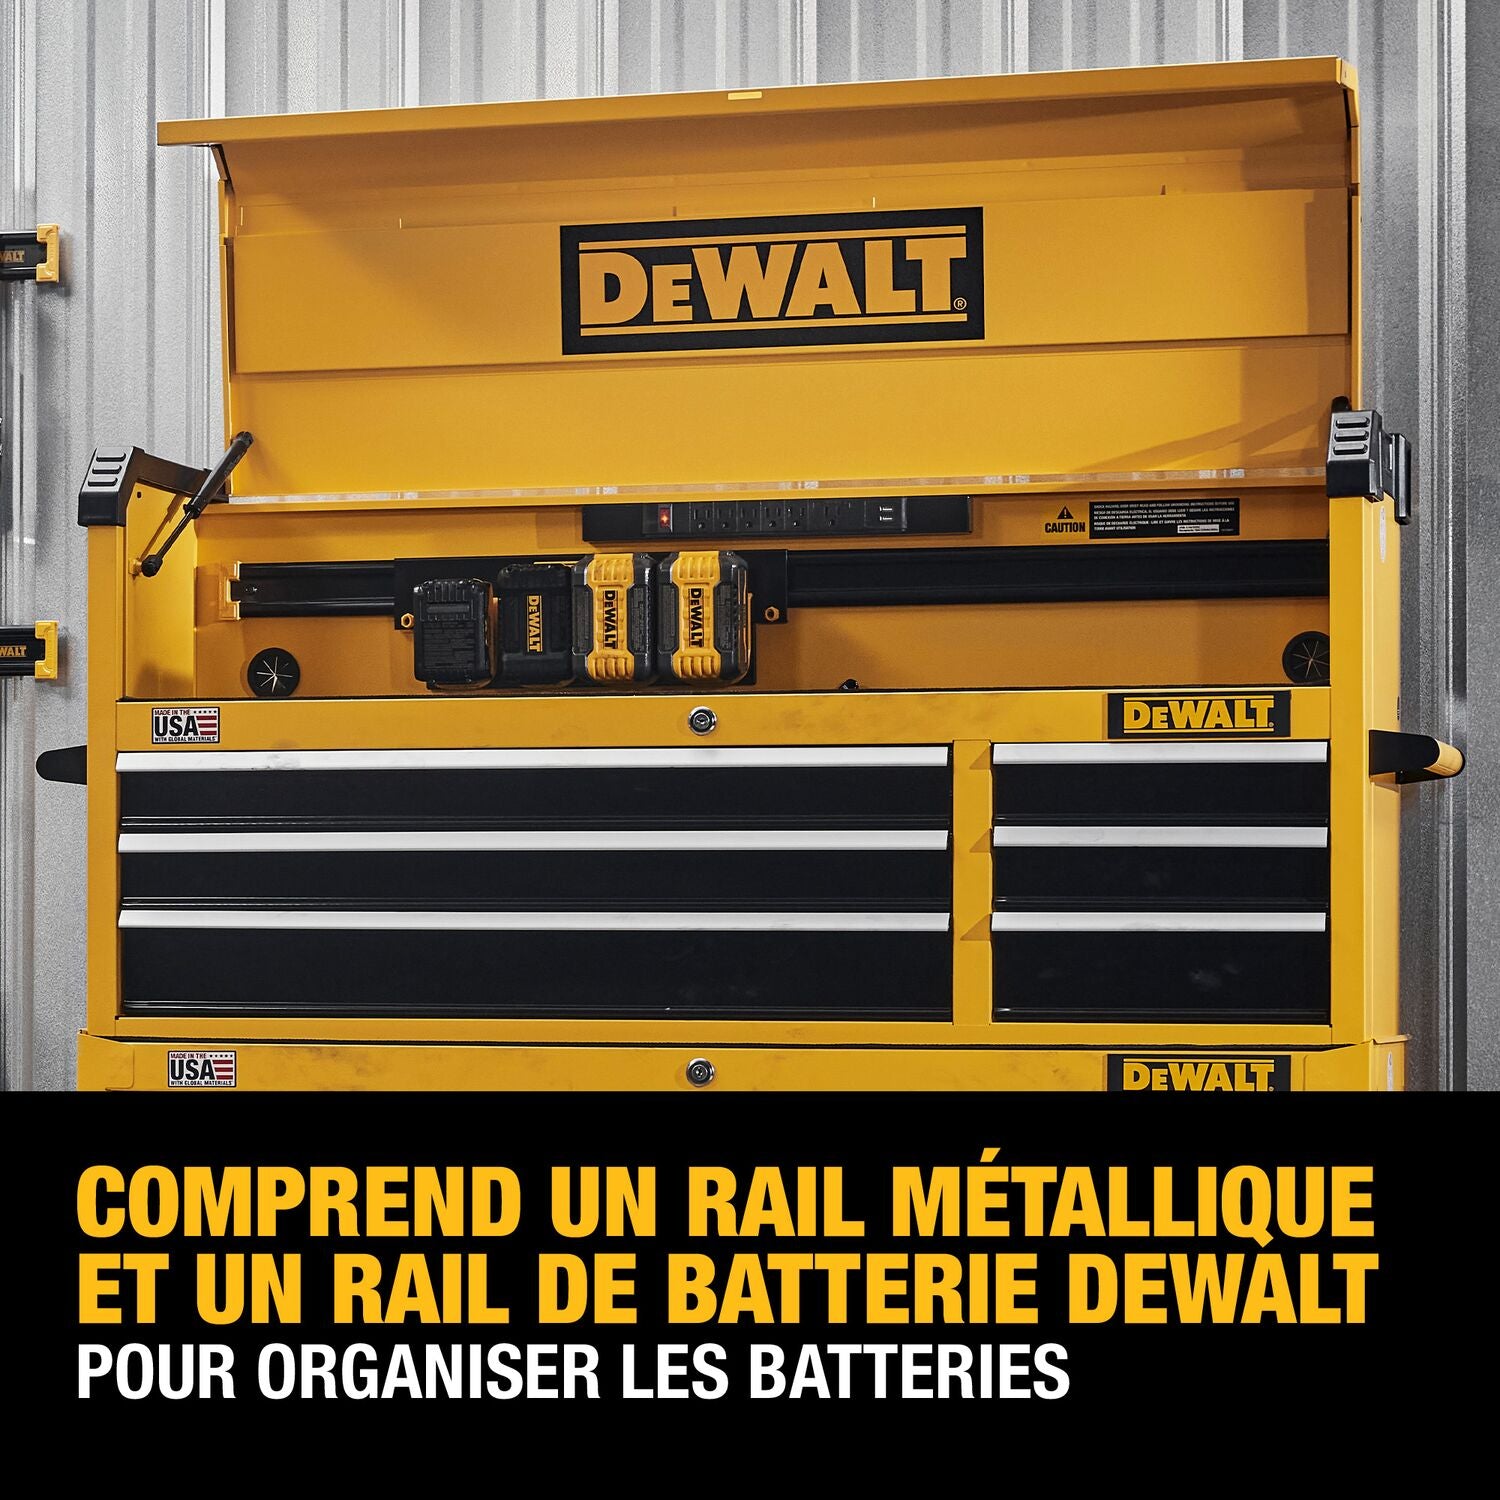 Dewalt DWST52071 - DEWALT® 52 in. 6-Drawer Tool Chest